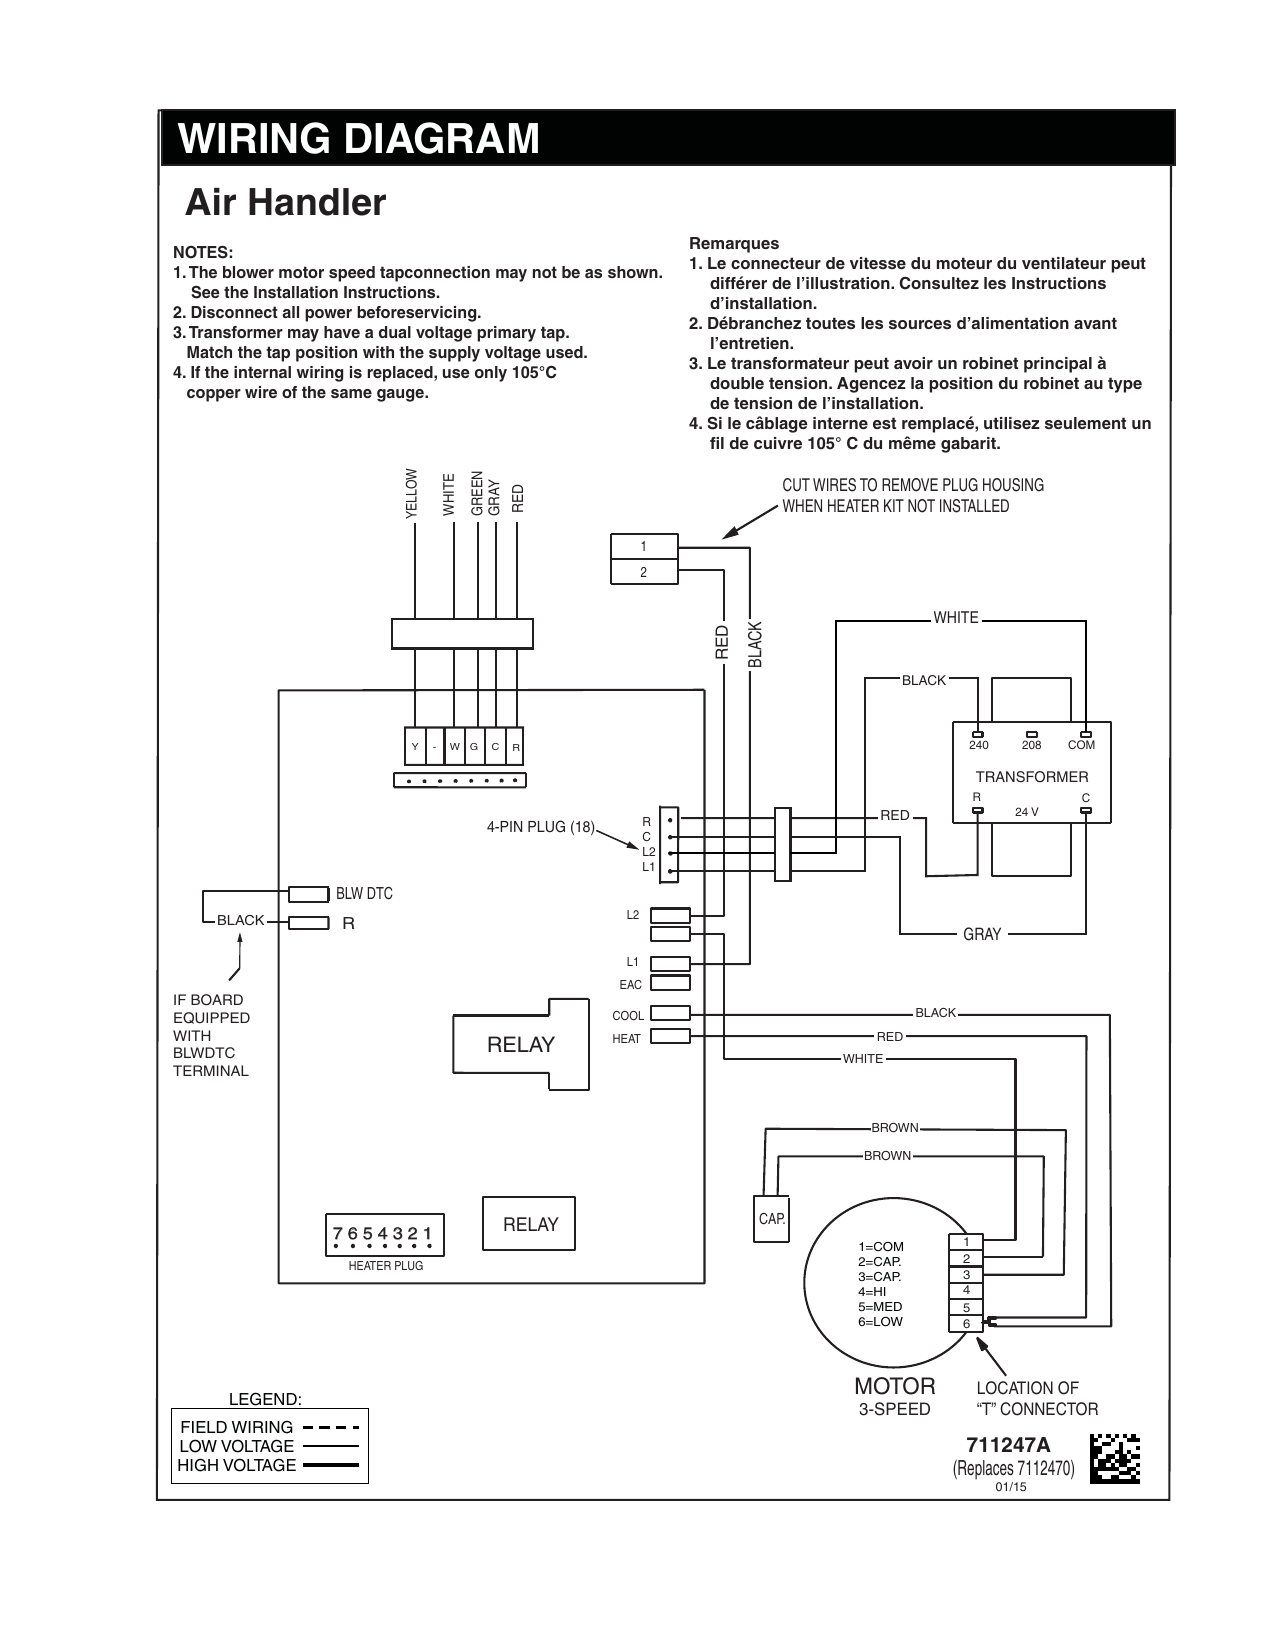 Westinghouse B6BM-X Wiring Diagram | Manualzz 12V Switch Wiring Diagram Manualzz